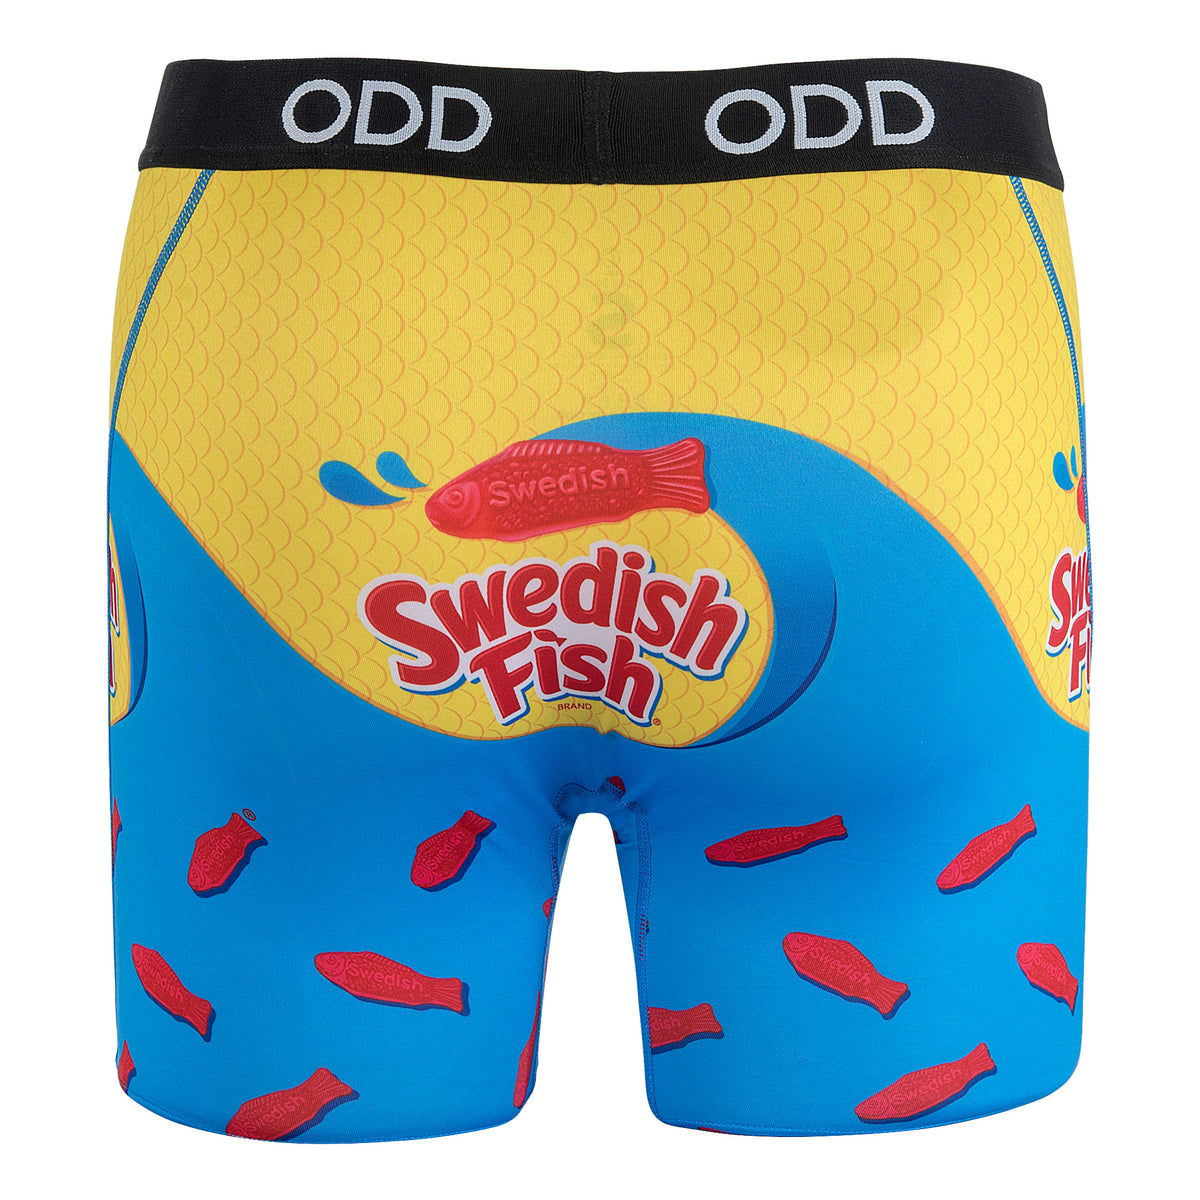 Swedish Fish - Men's Boxer Brief